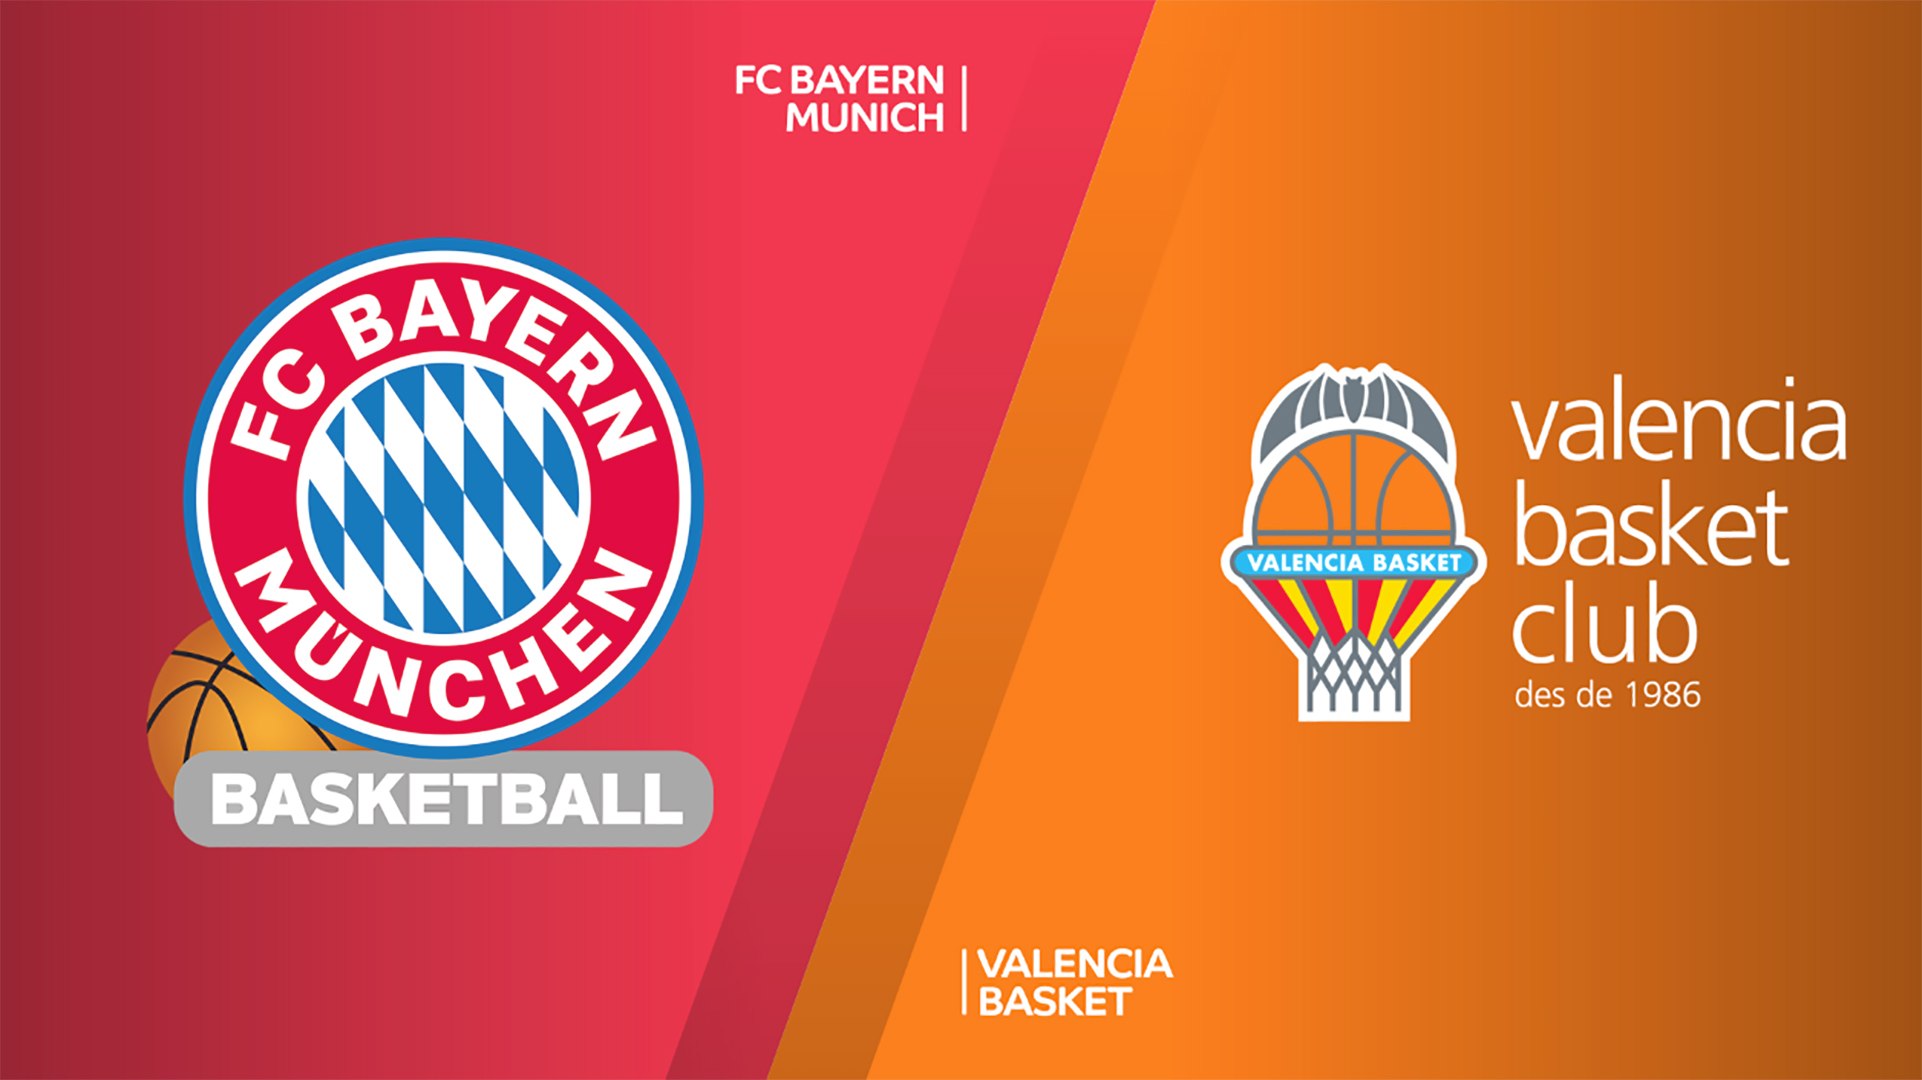 Crvena Zvezda mts Belgrade - FC Bayern Munich Highlights